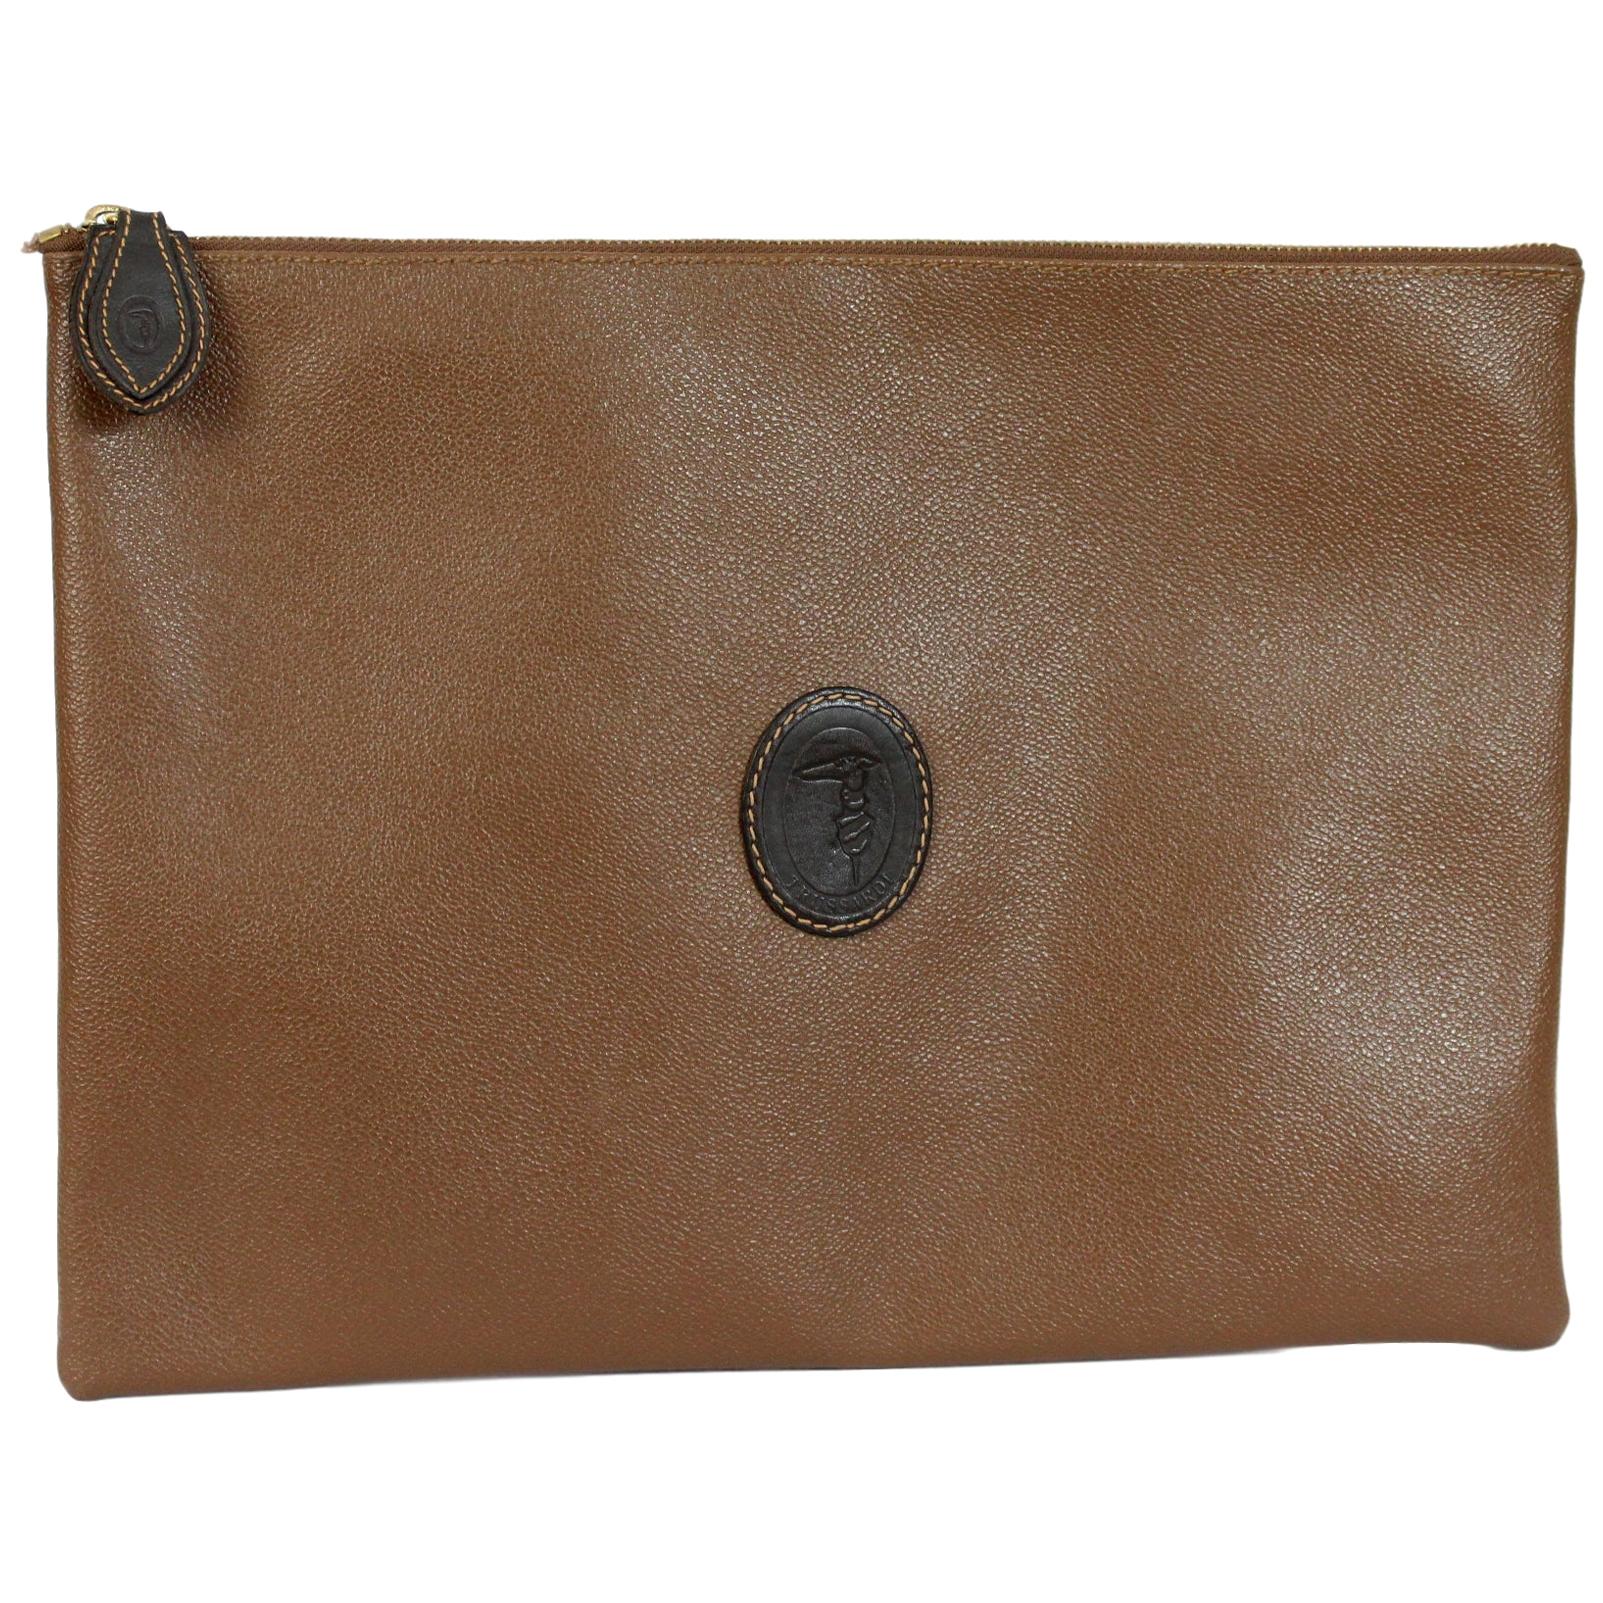 Trussardi Brown Leather Canvas Clutch Bag 